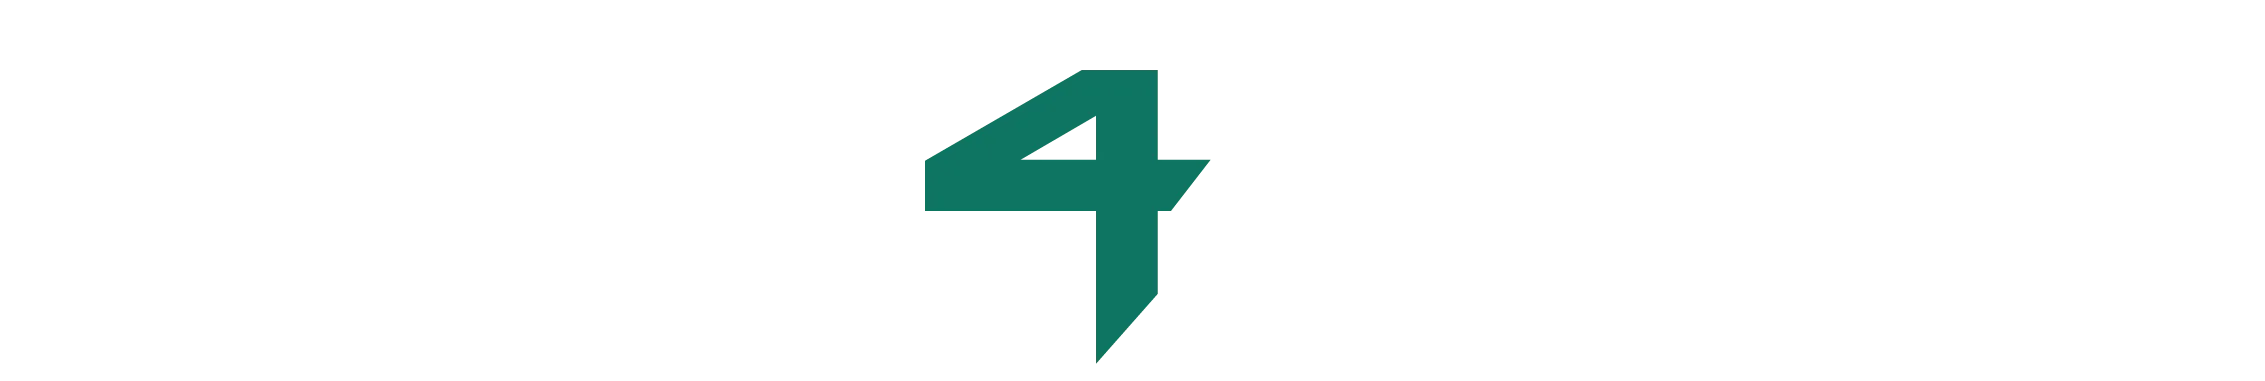 Gr8 4 Tshirts Logo White and Green